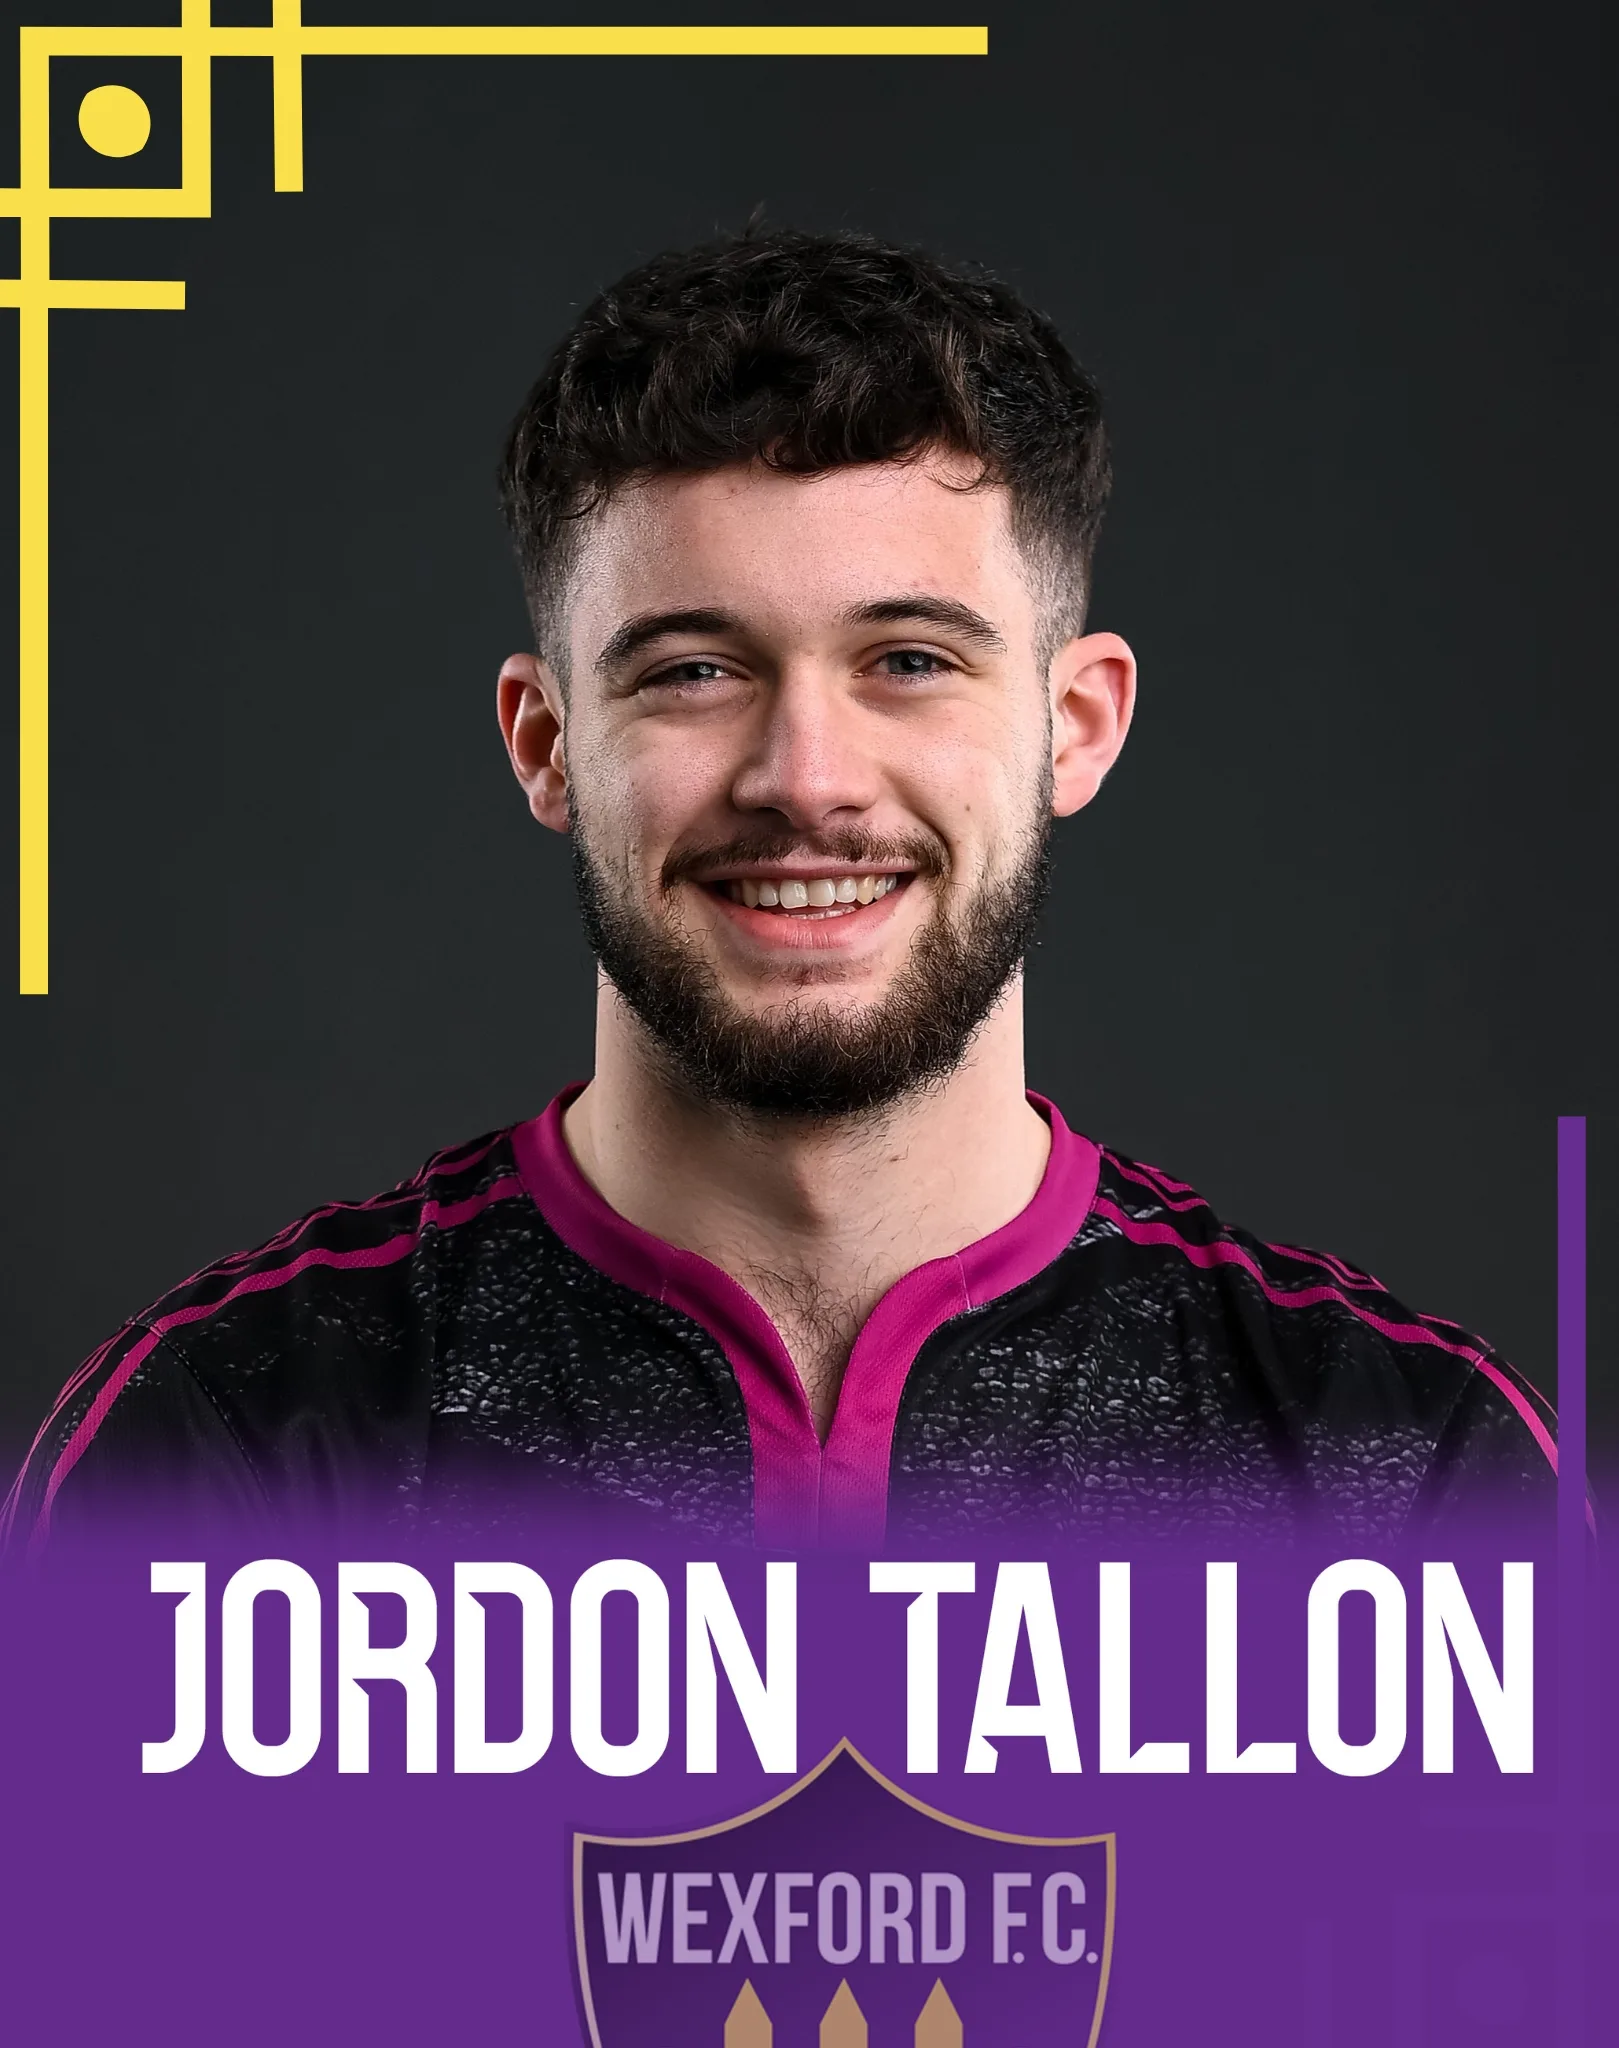 Jordon Tallon returns to Wexford FC